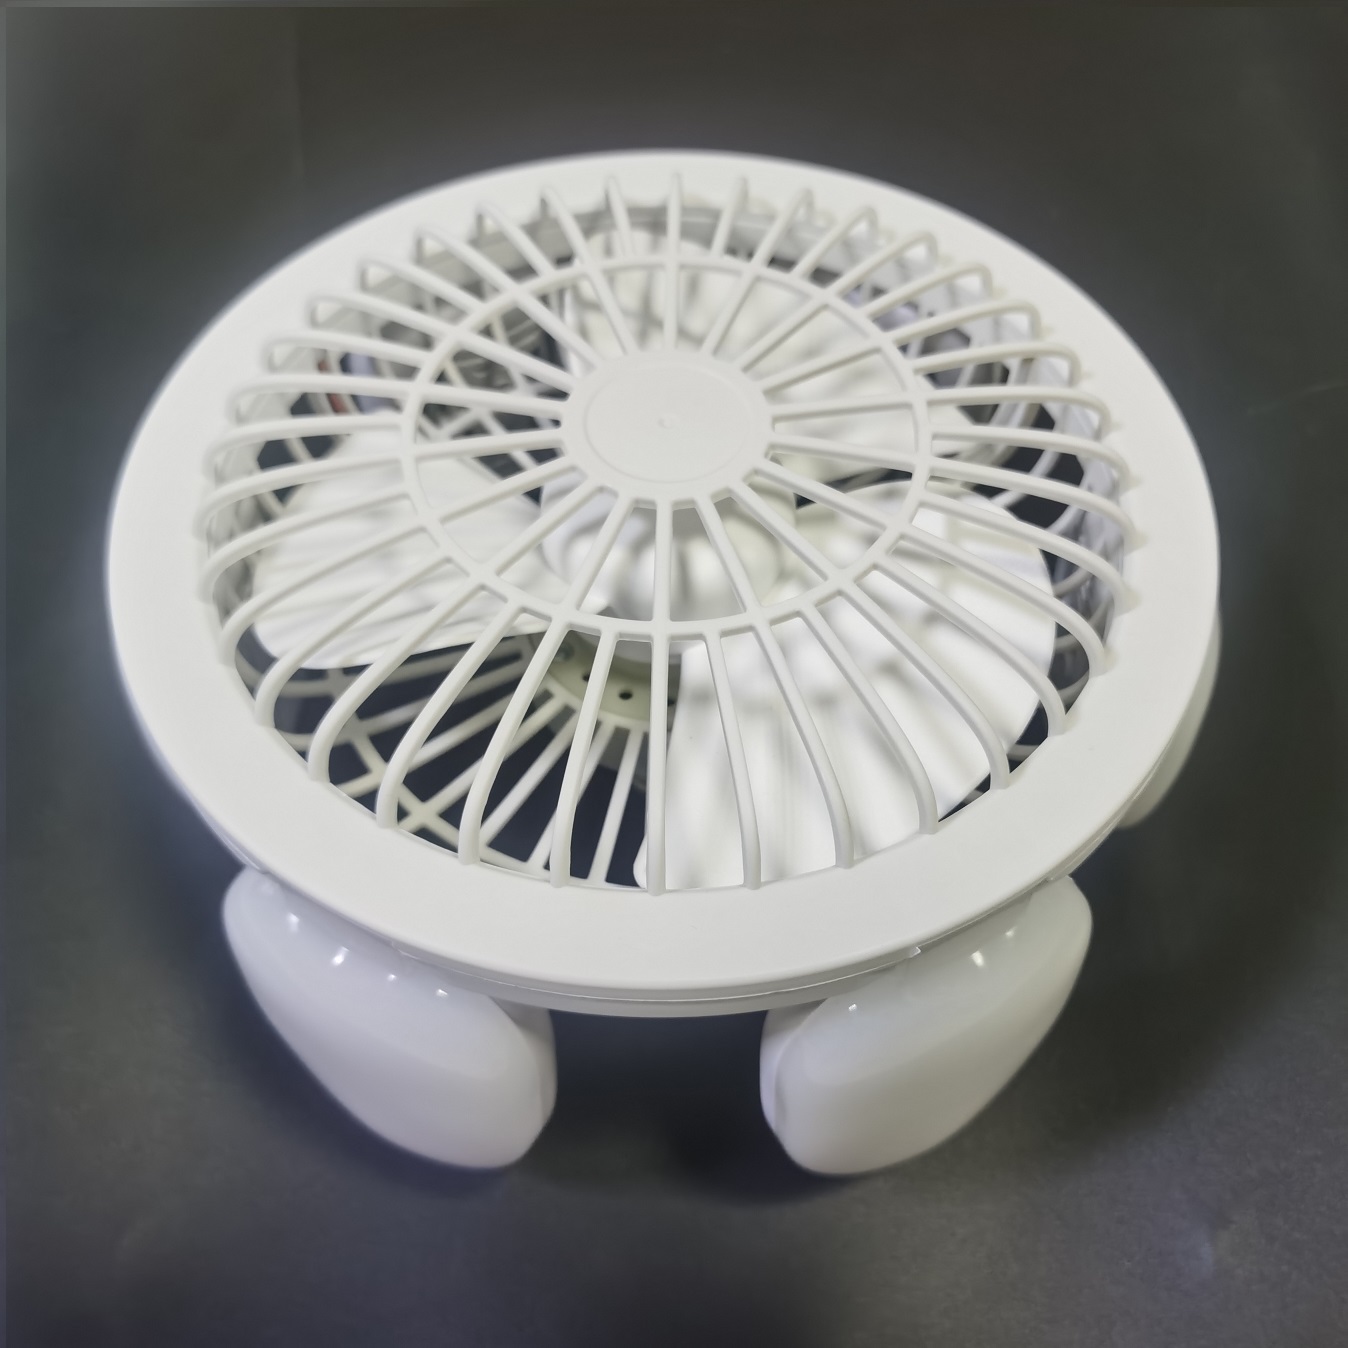 Remote control fan light